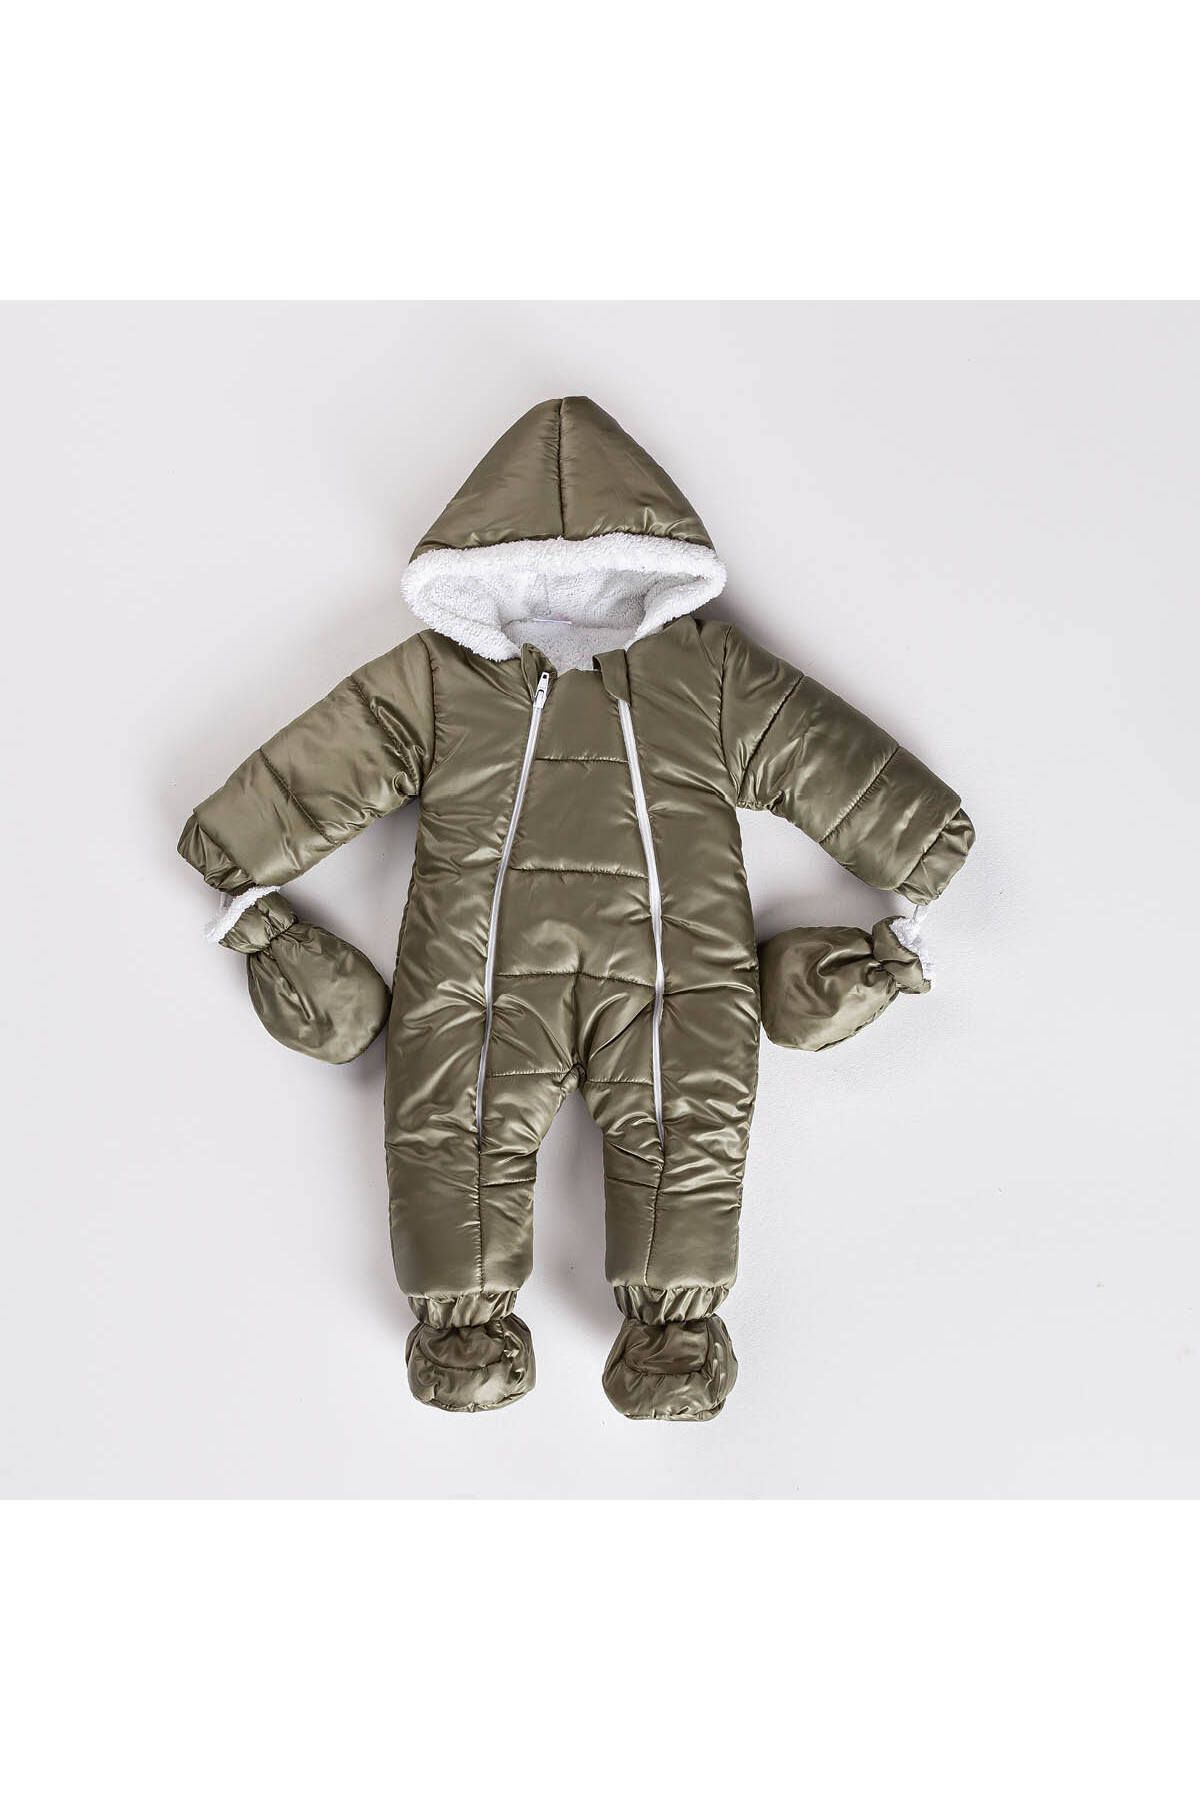 Puppis Baby Erkek Bebek Düz Kozmonot, Welsoft Astarlı Elyaf Dolgulu Eldivenli Ve Patikli